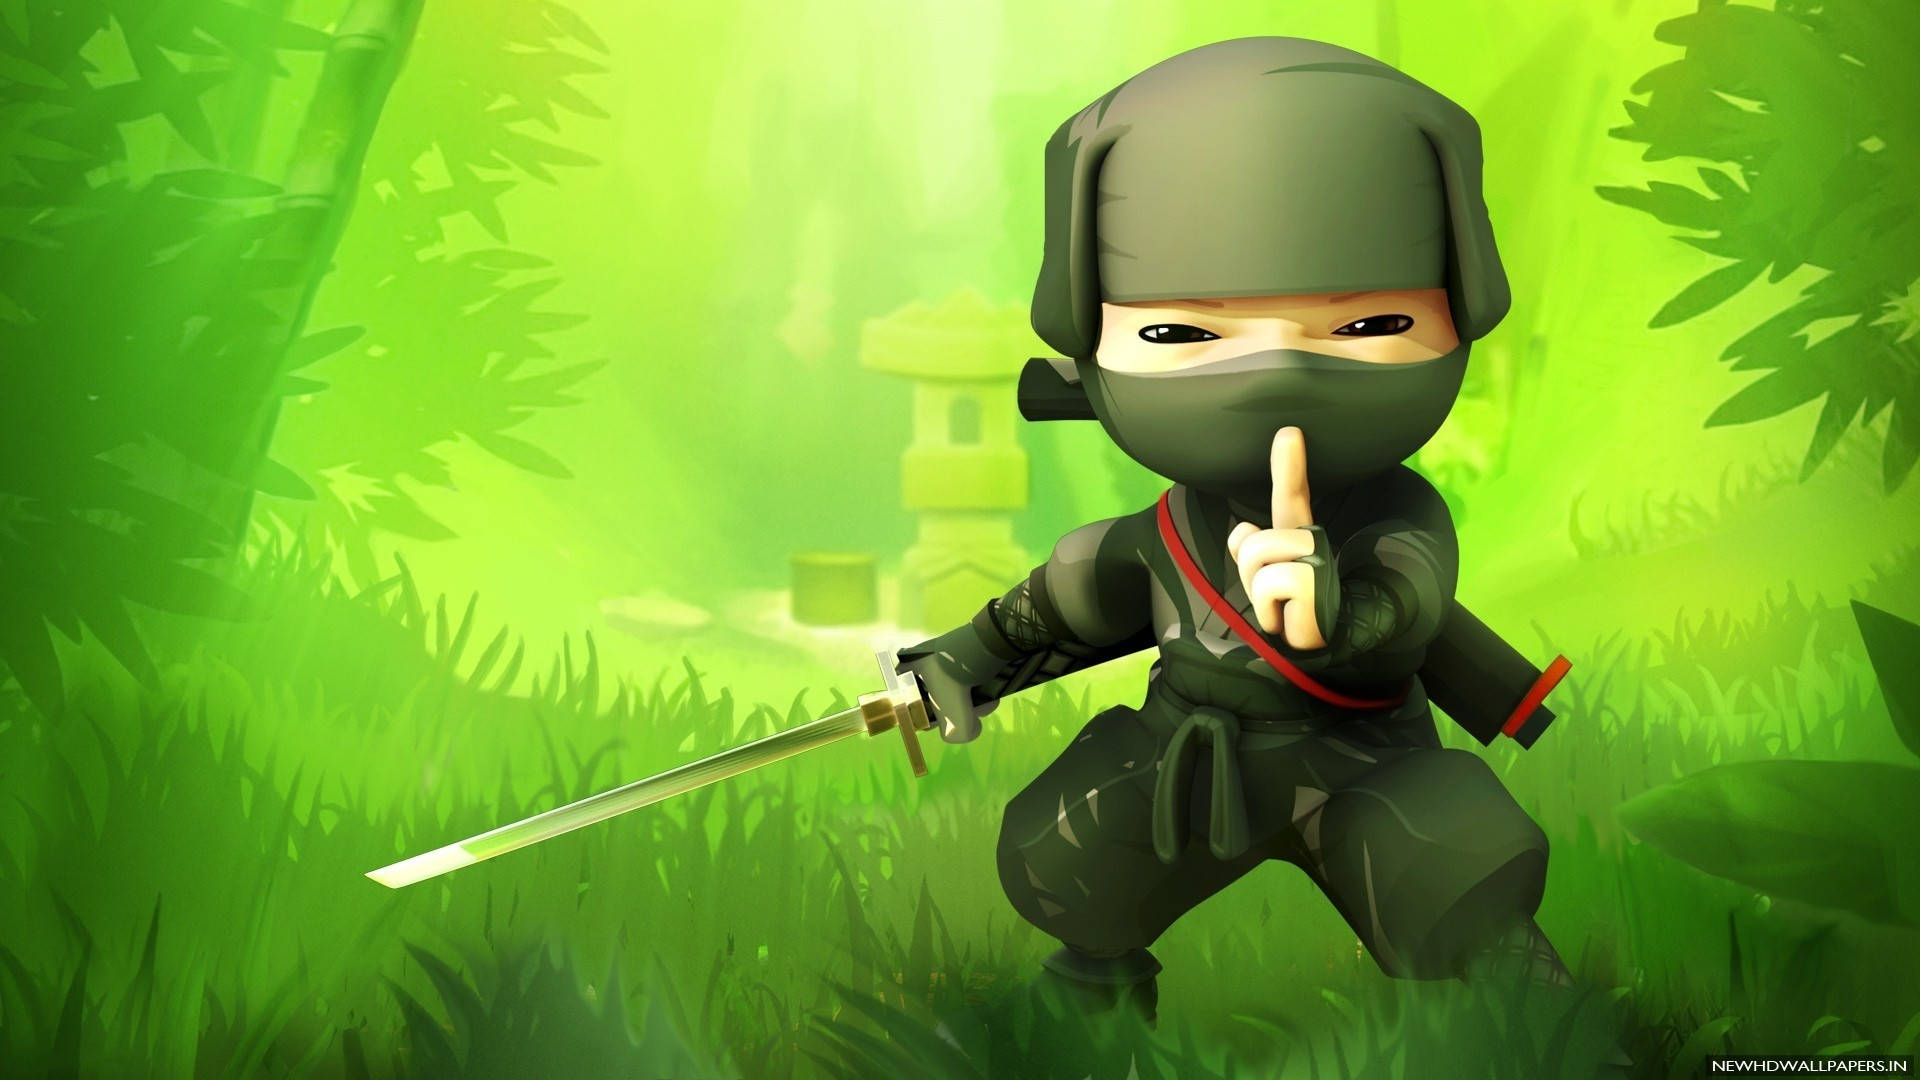 Ninja 4k Cartoon Picture